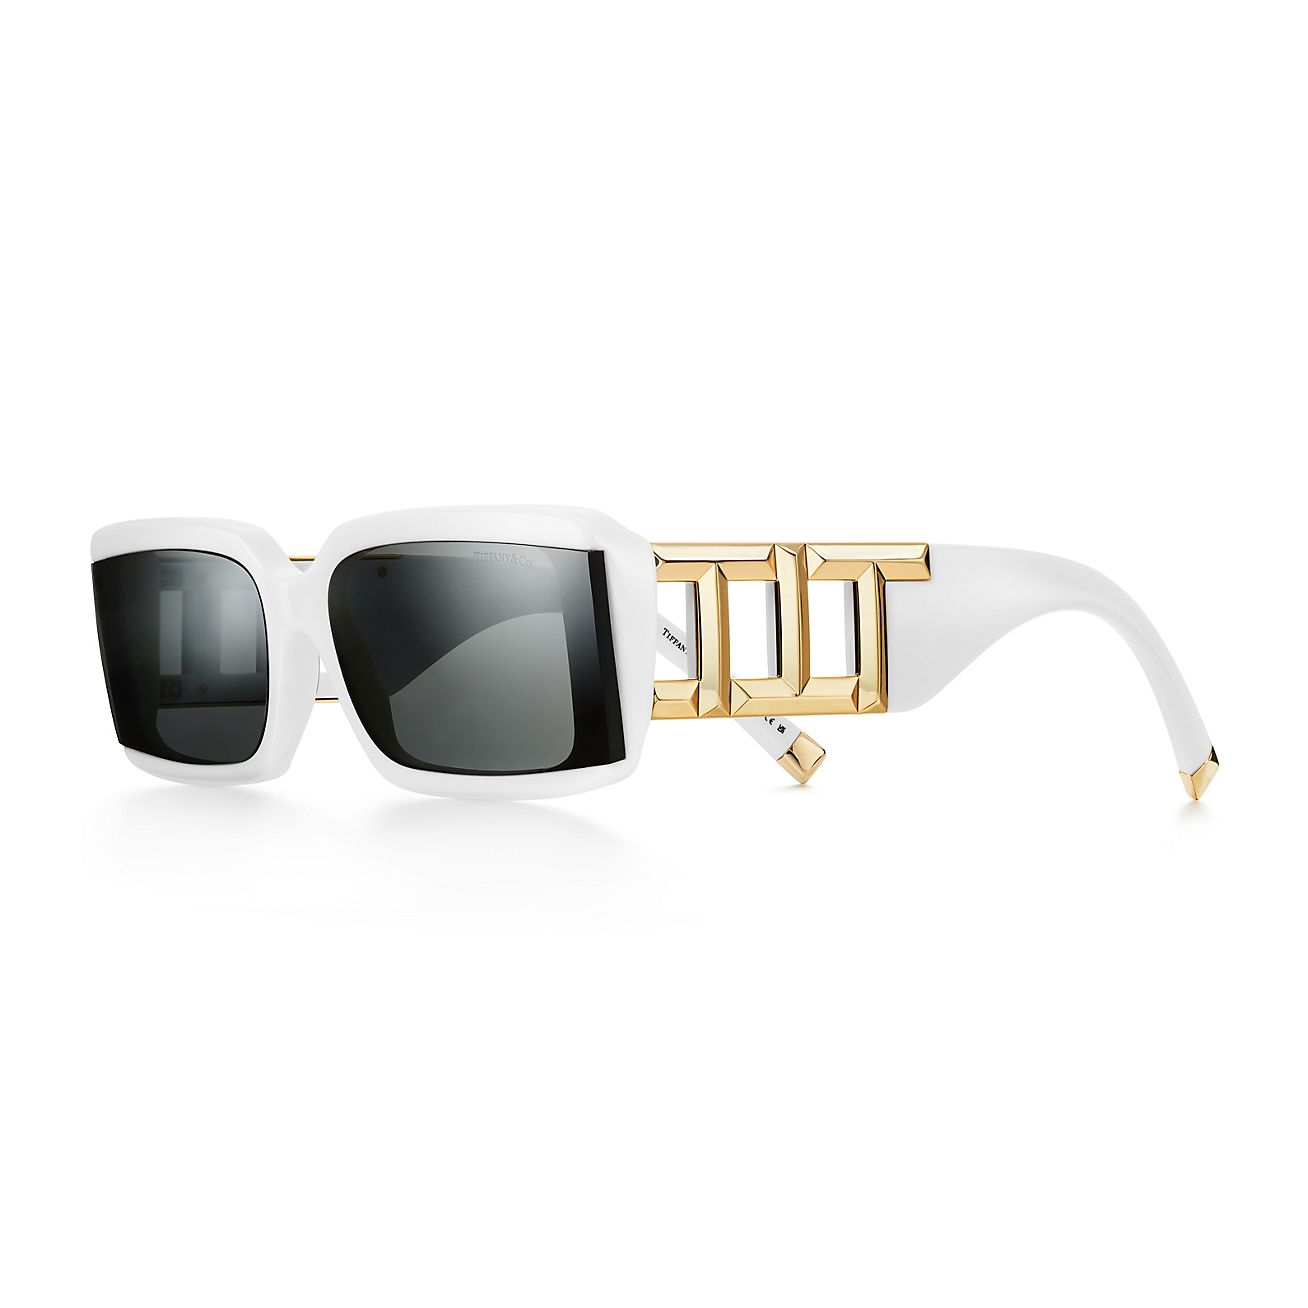 LV White sunglasses  Sunglasses, White sunglasses, Sunglasses